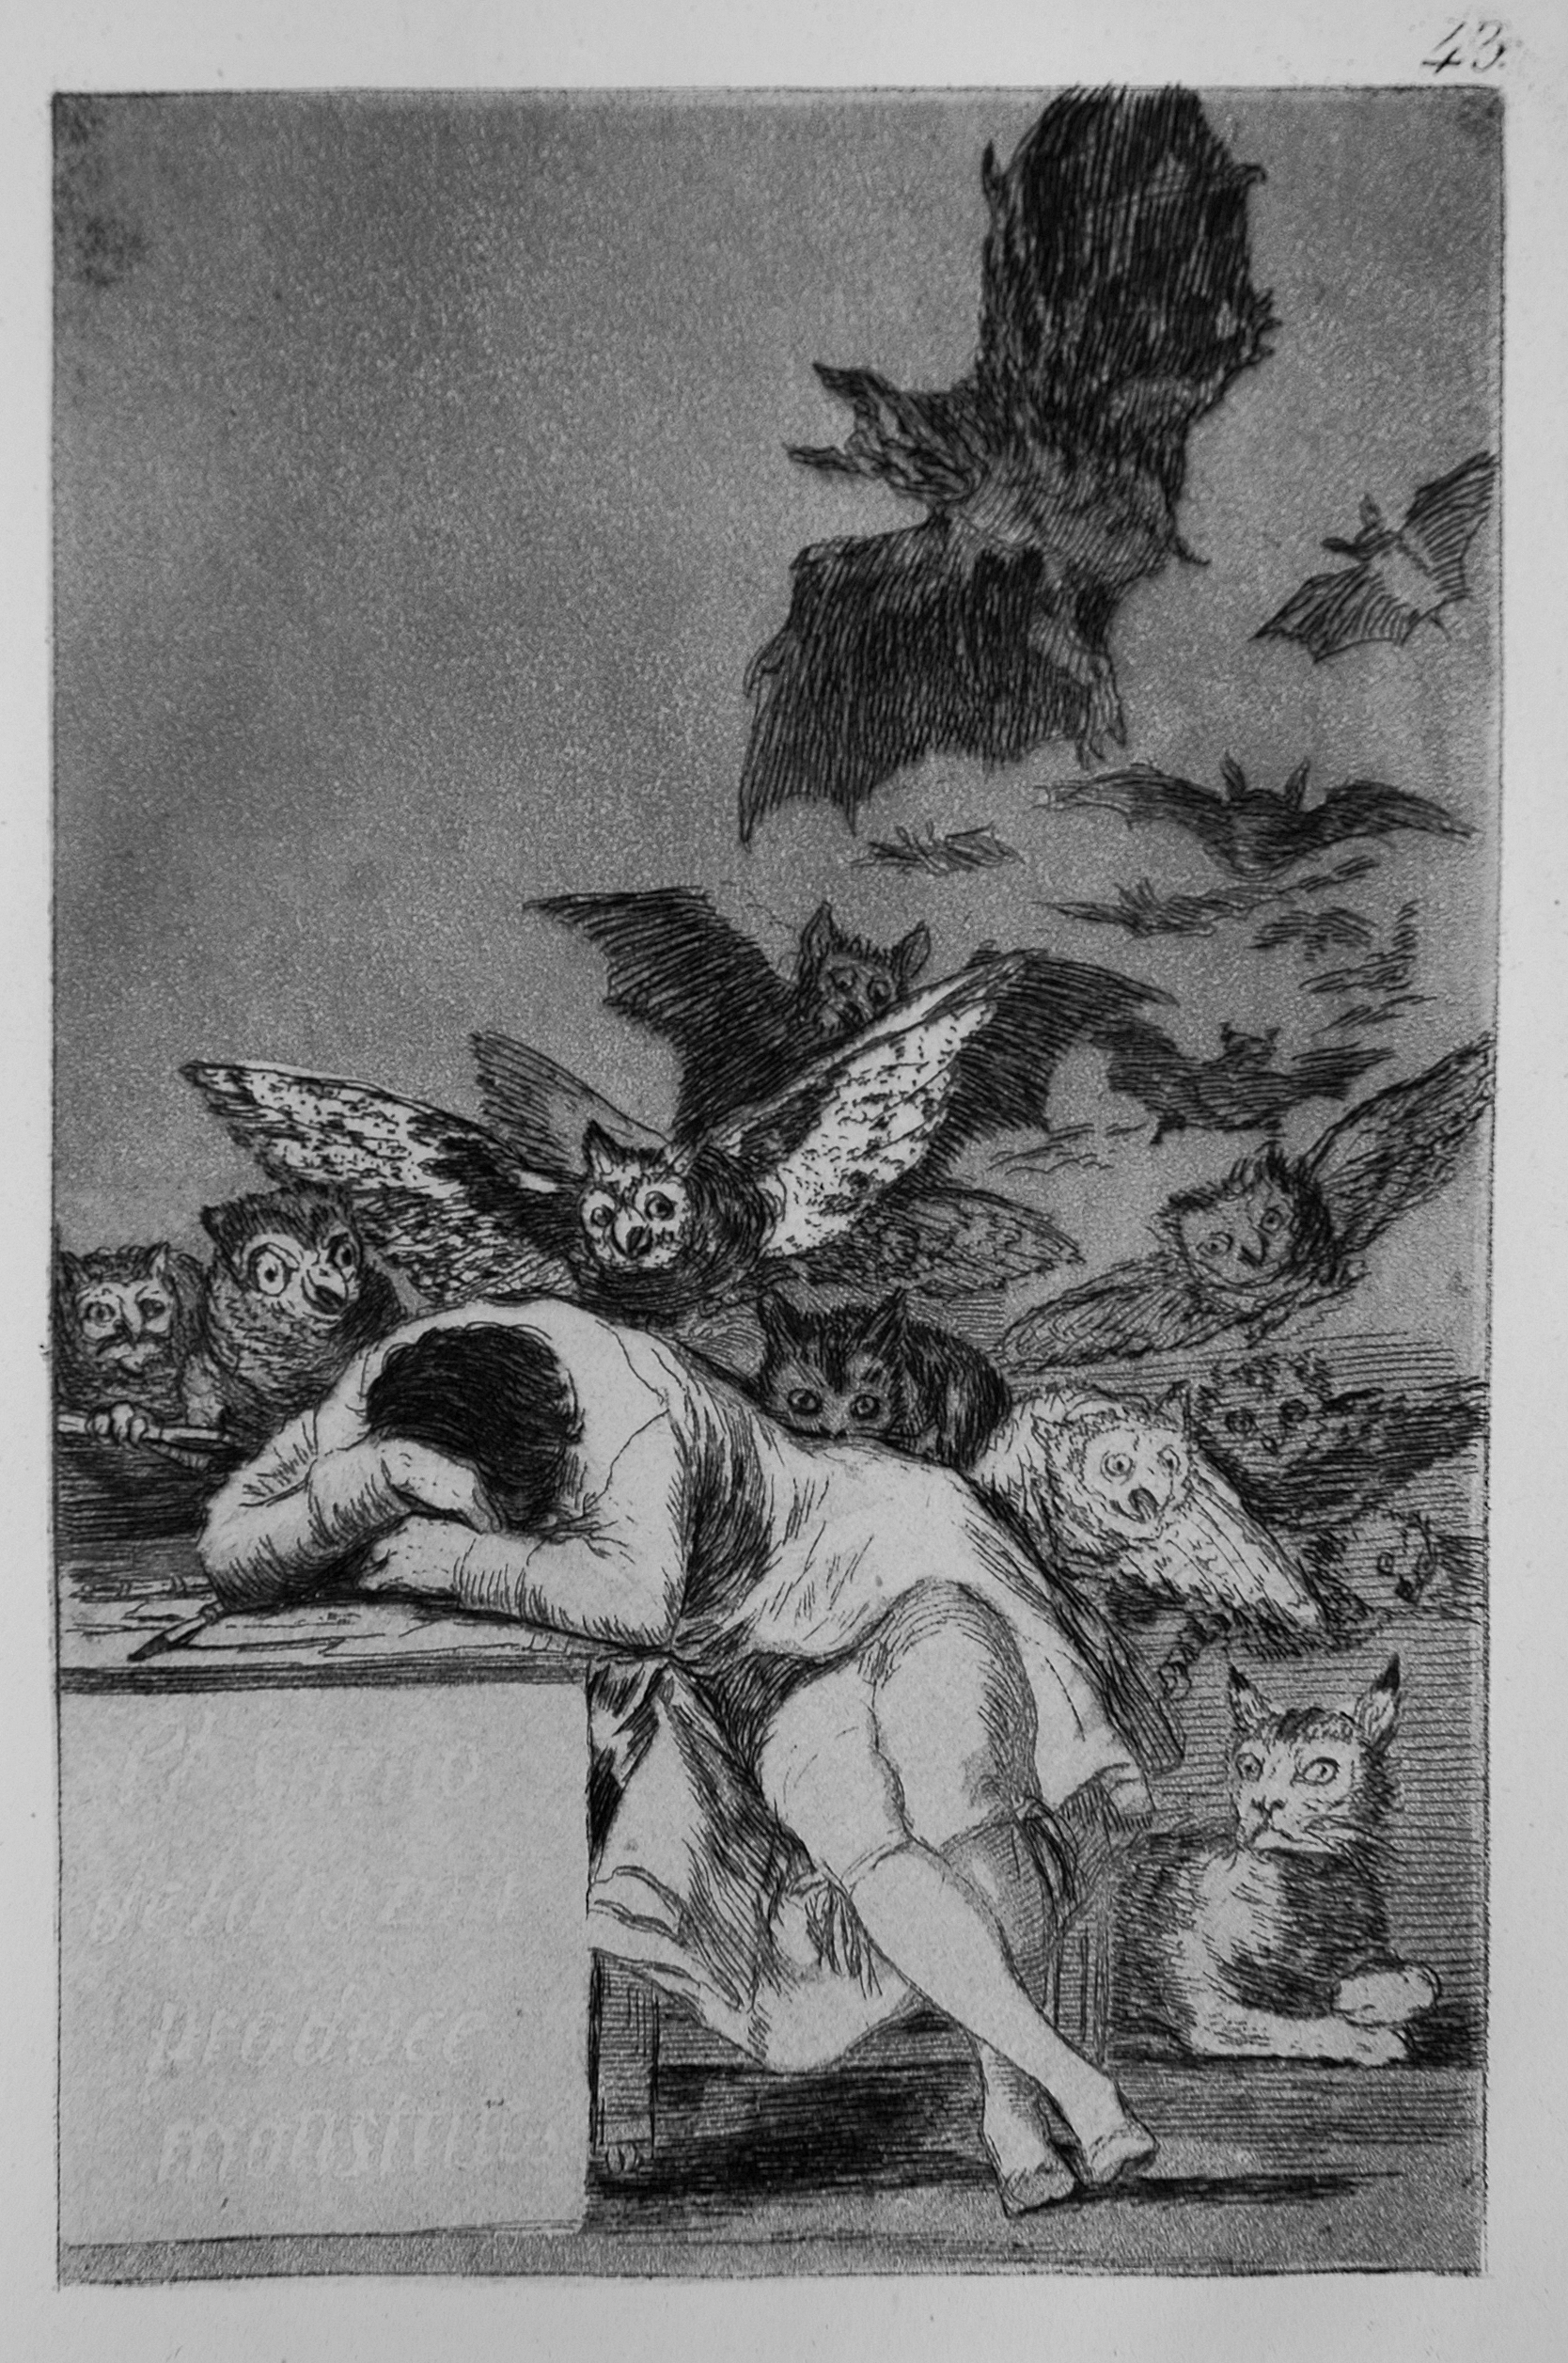 Francisco Goya 'The sleep of reason produces monsters' (1797-1799)